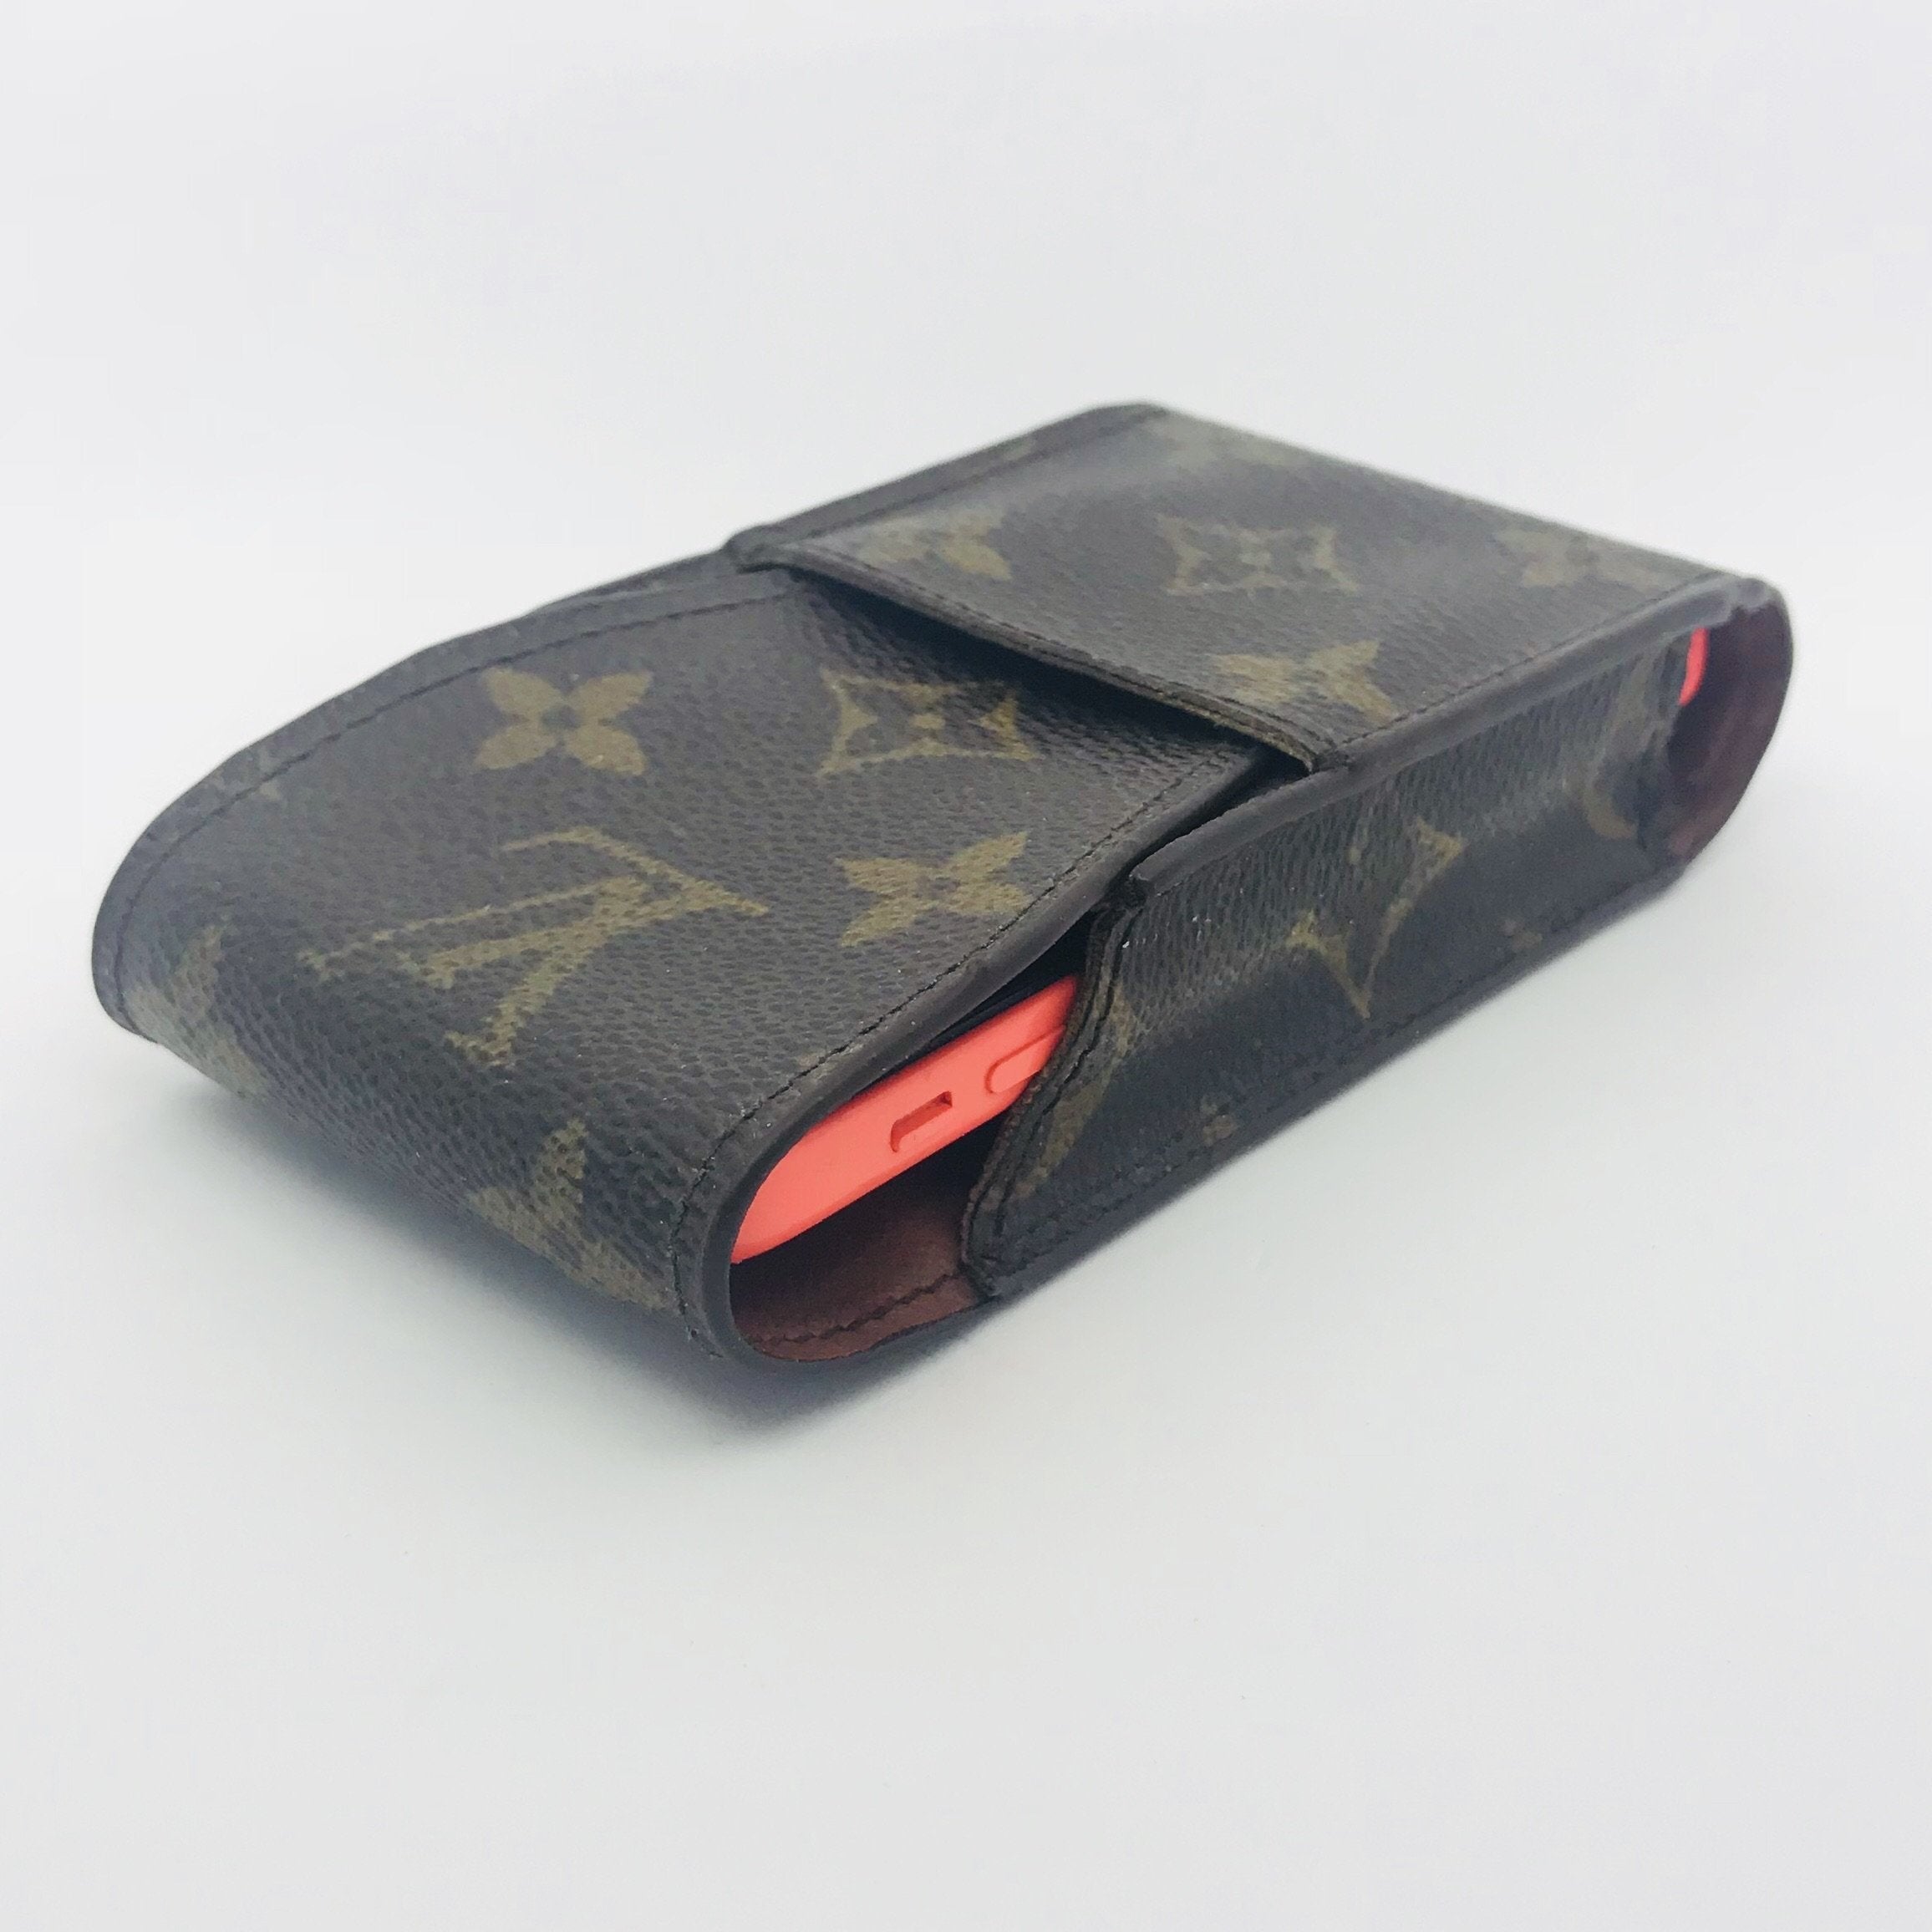 Louis Vuitton Damier Ebene Mobile Etui Phone Case Cigarette Holder 416lv528